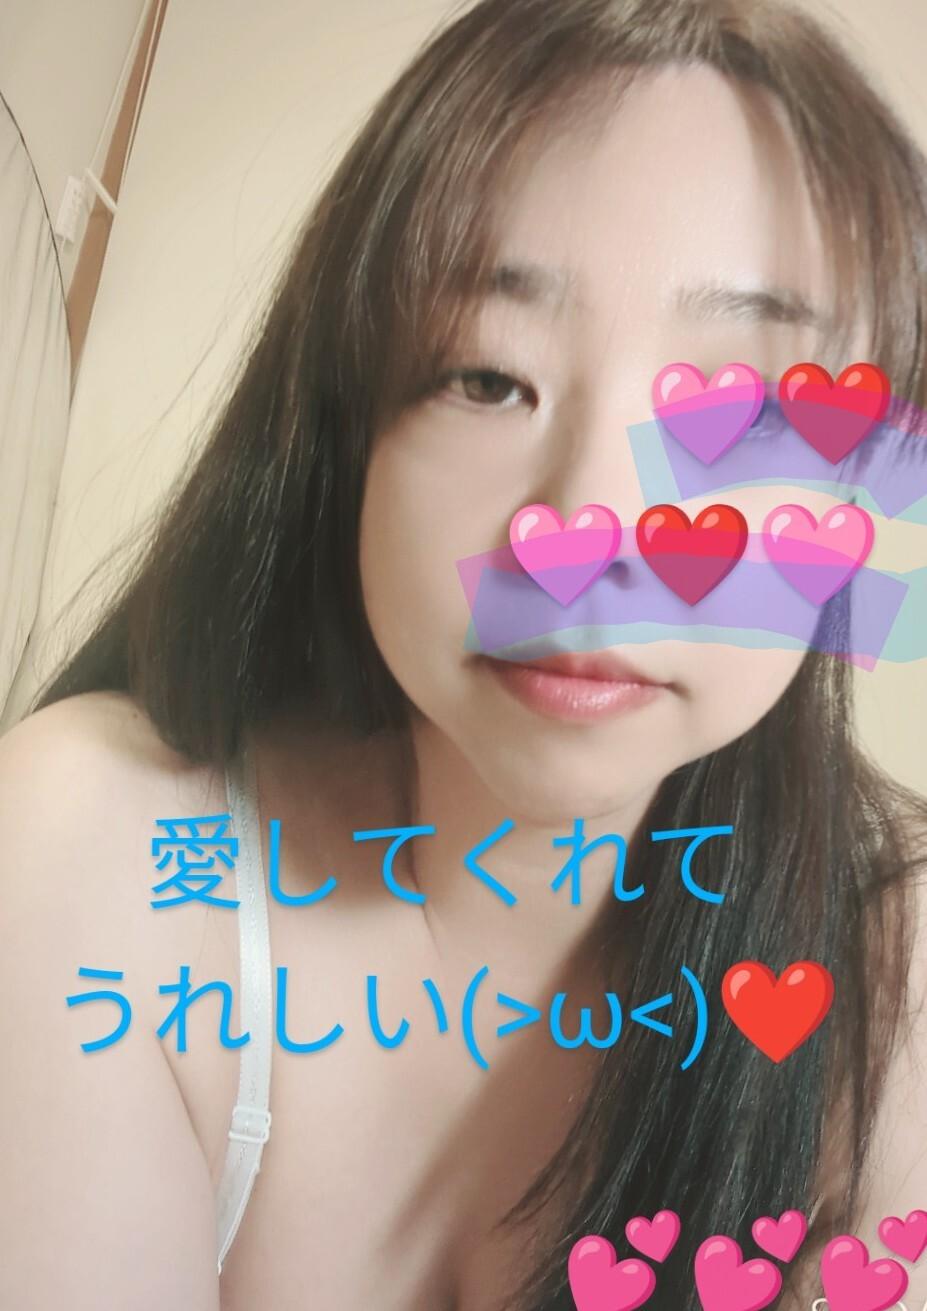 <img class="emojione" alt="❤️" title=":heart:" src="https://fuzoku.jp/assets/img/emojione/2764.png"/>28日のお礼<img class="emojione" alt="💌" title=":love_letter:" src="https://fuzoku.jp/assets/img/emojione/1f48c.png"/>